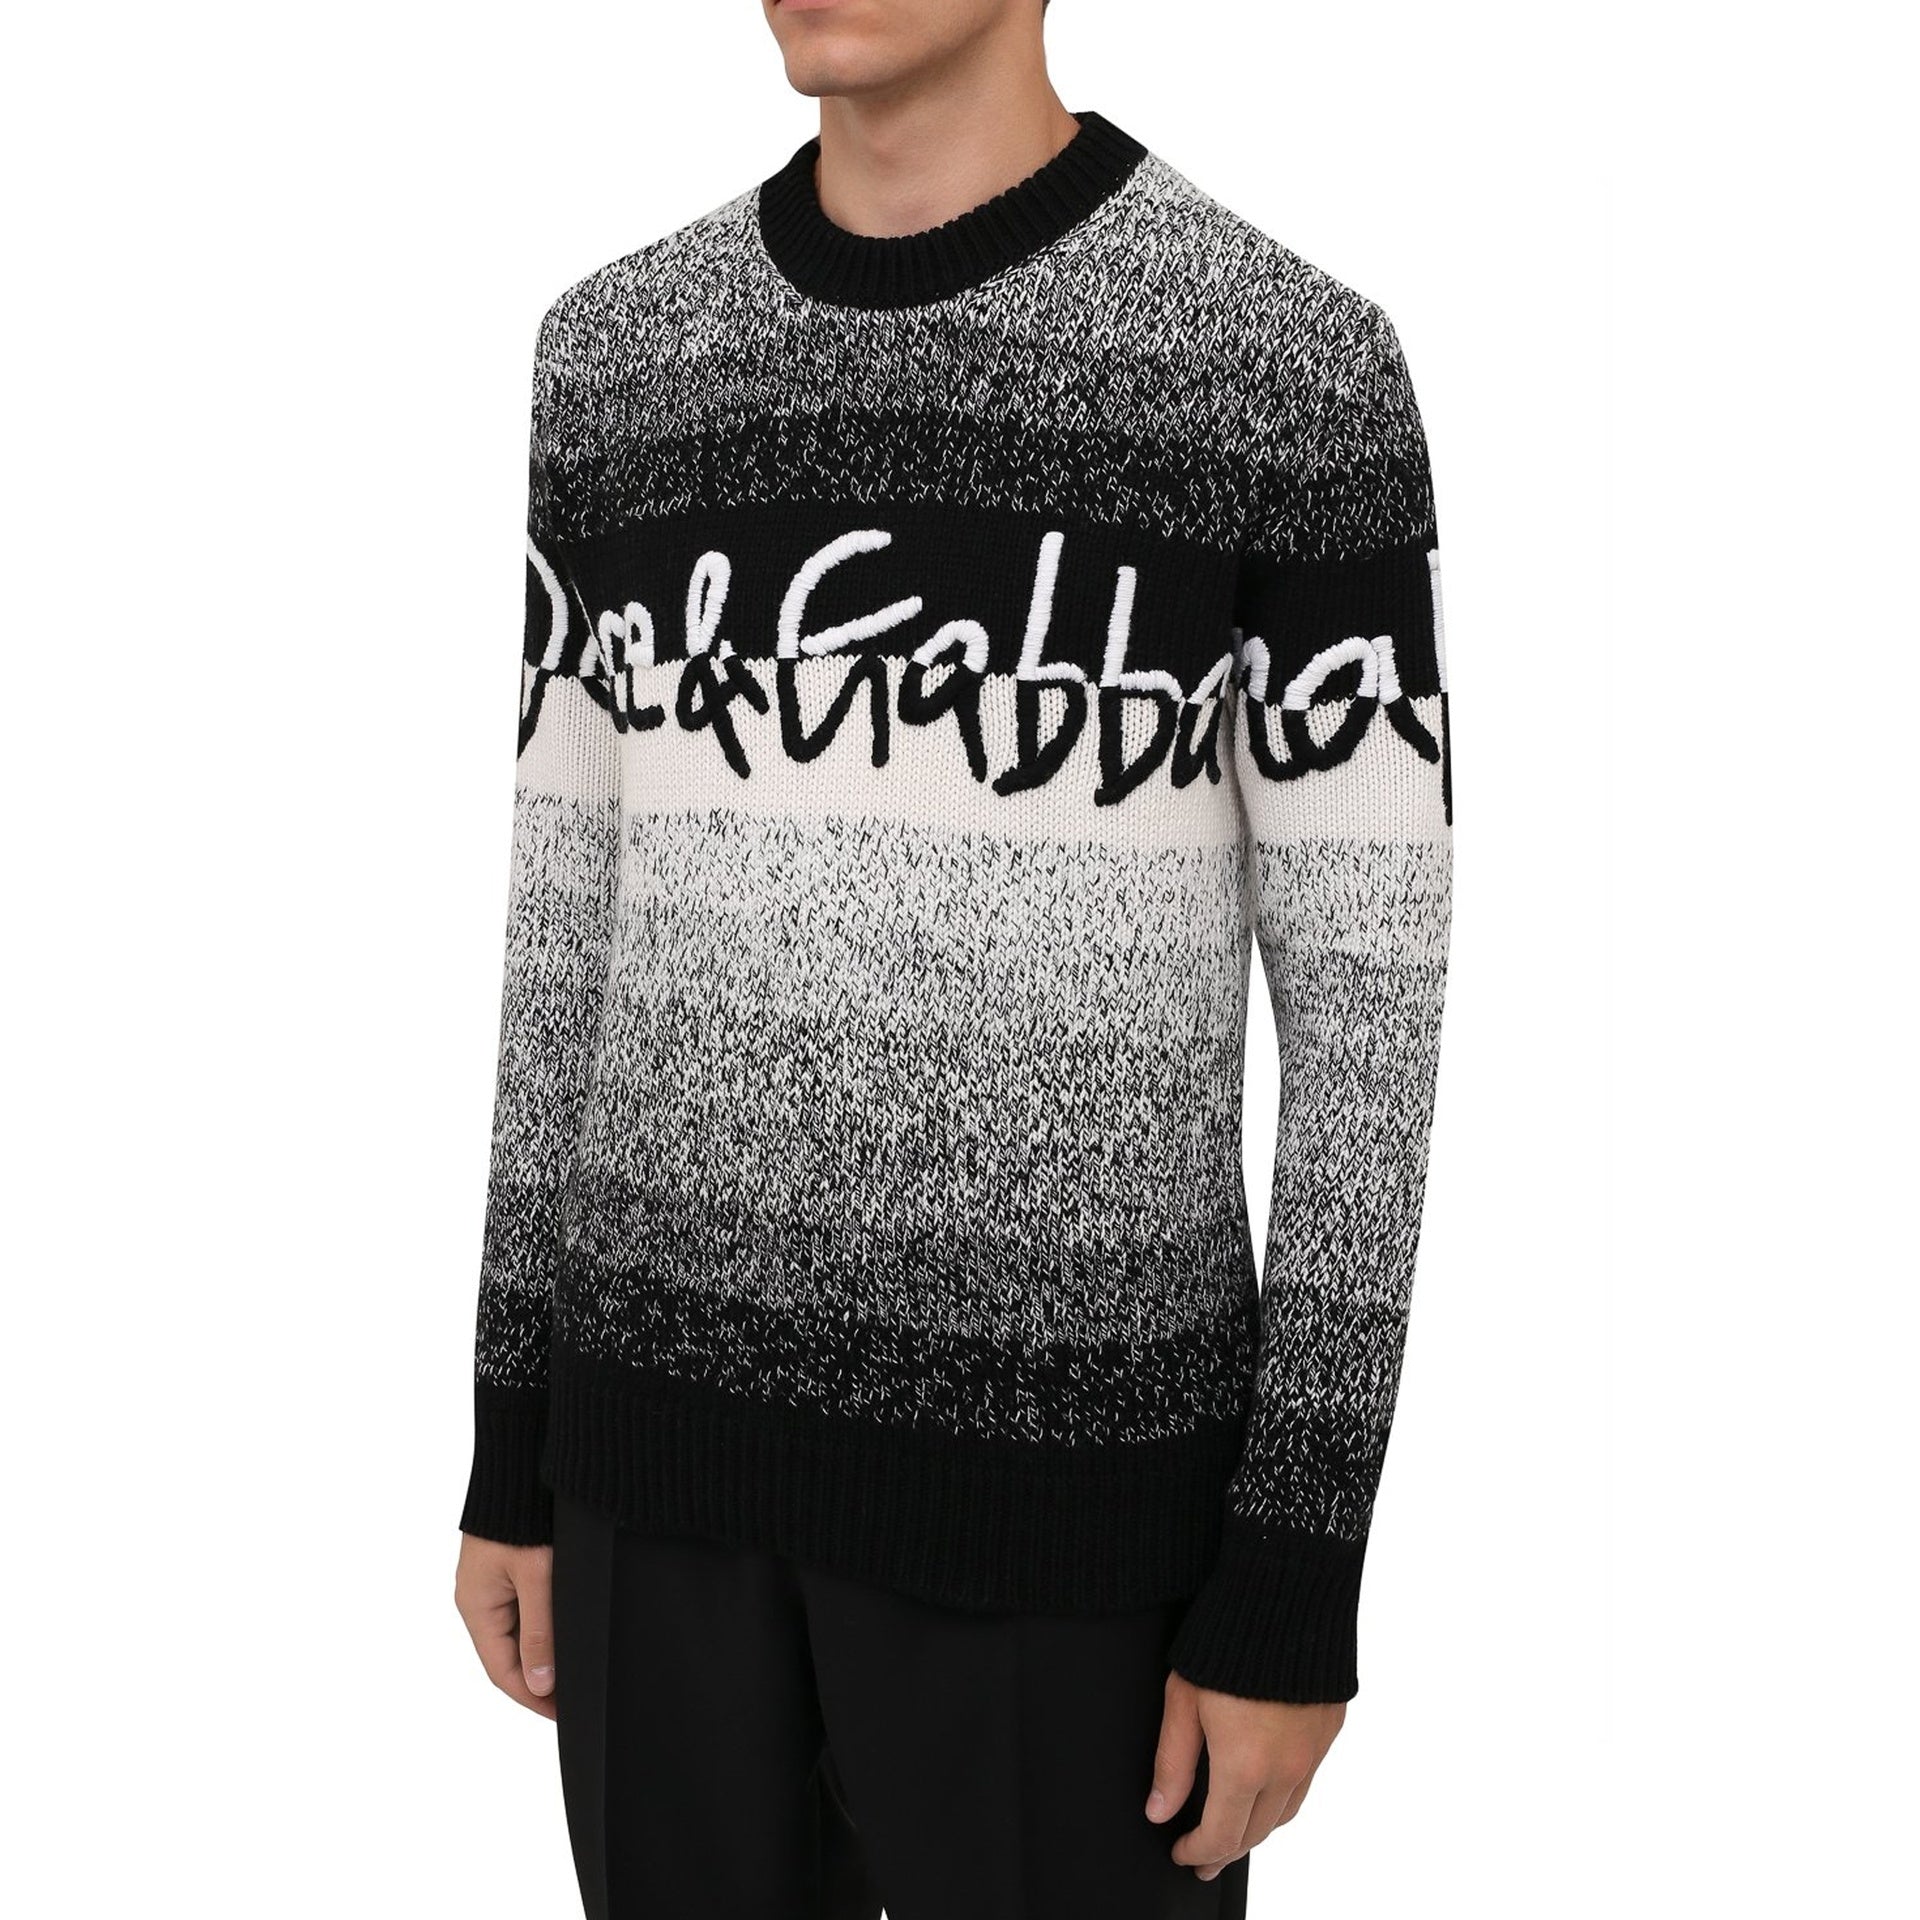 DOLCE___GABBANA_Dolce___Gabbana_Logo_Sweater_GX525Z_JCMA9_S9000_Black_2.jpg